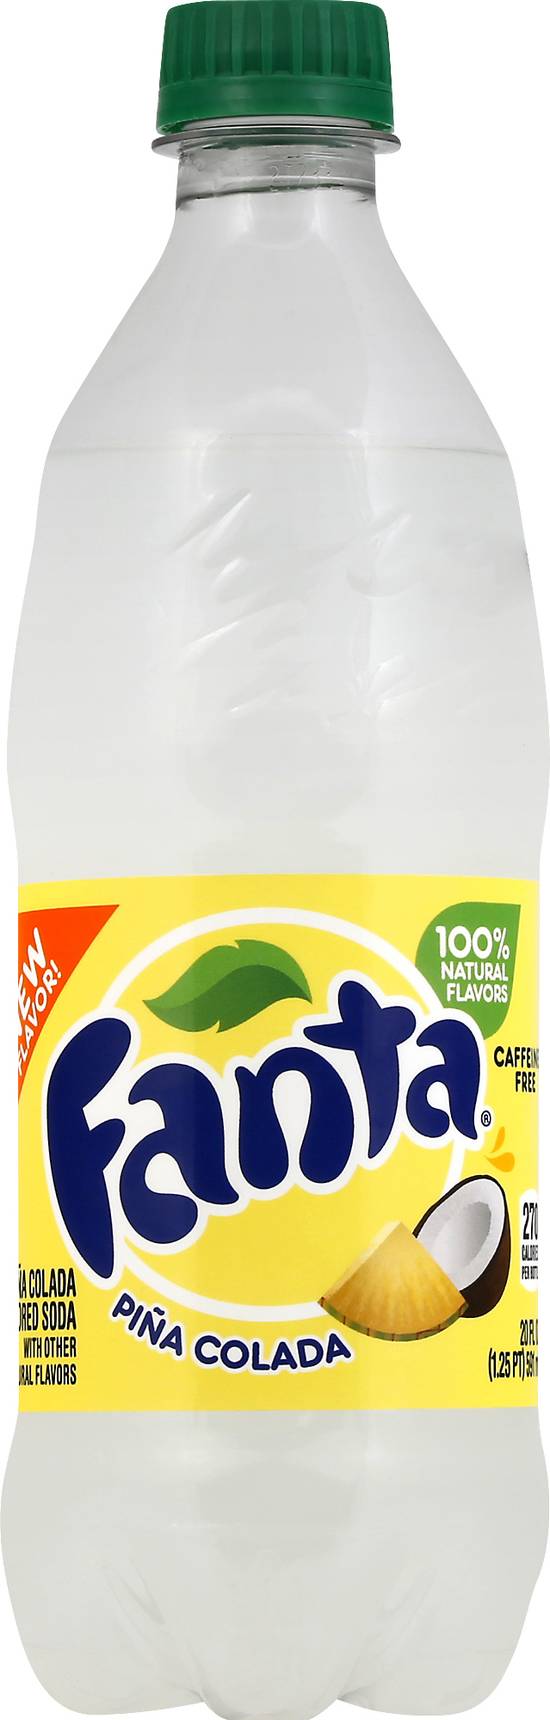 Fanta Pina Colada Soda (20 fl oz)